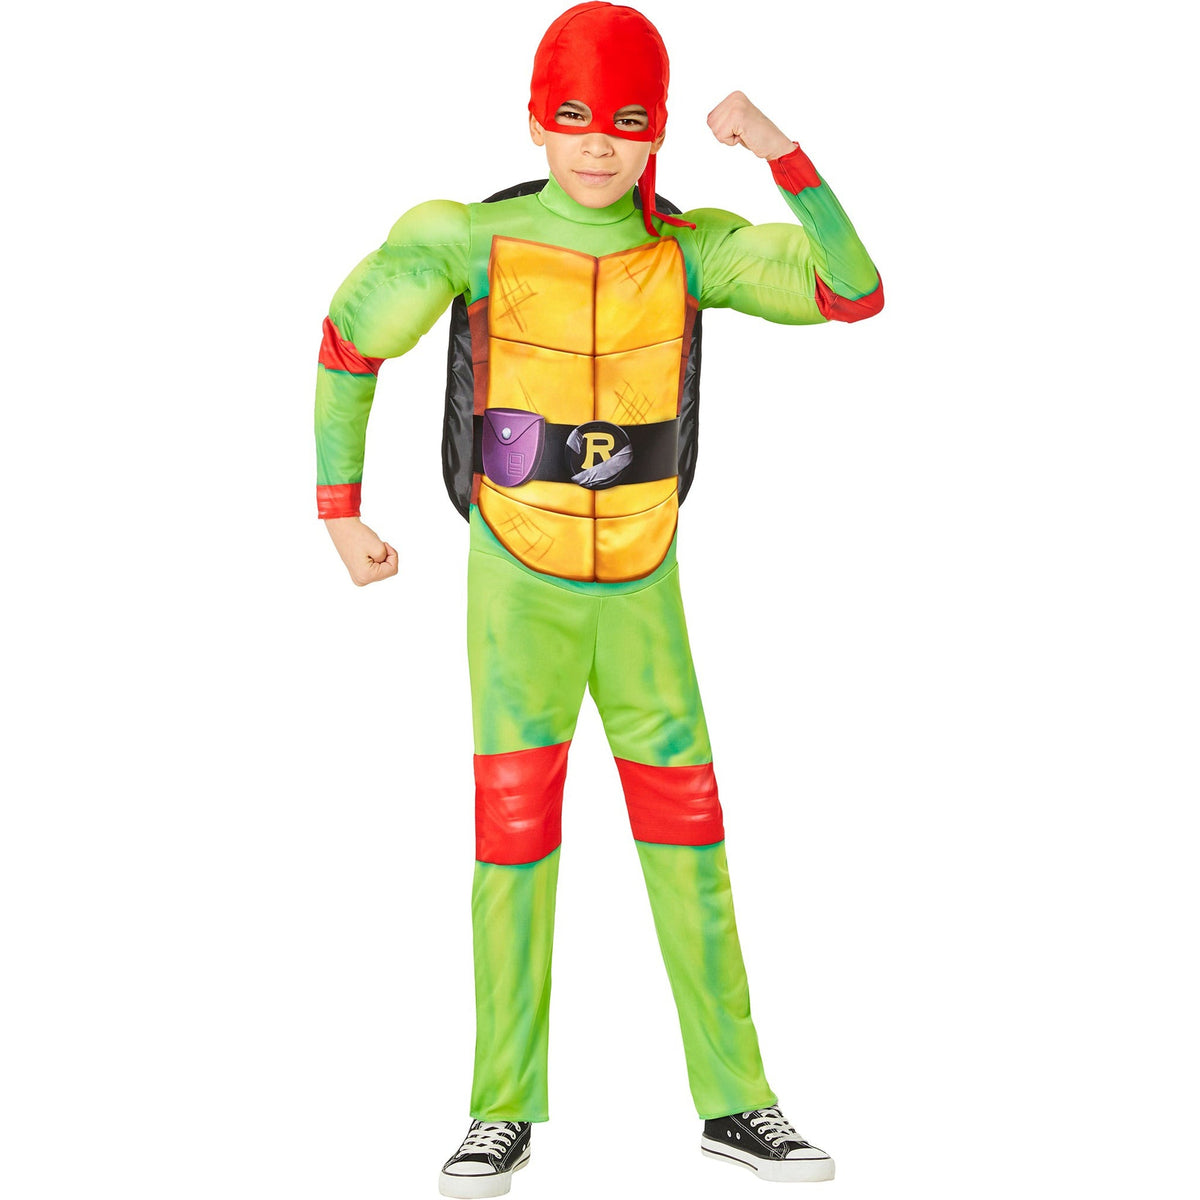 IN SPIRIT DESIGNS Costumes Raph Costume for Kids, Teenage Mutant Ninja Turtles: Mutant Mayhem, Red and Green Jumpsuit